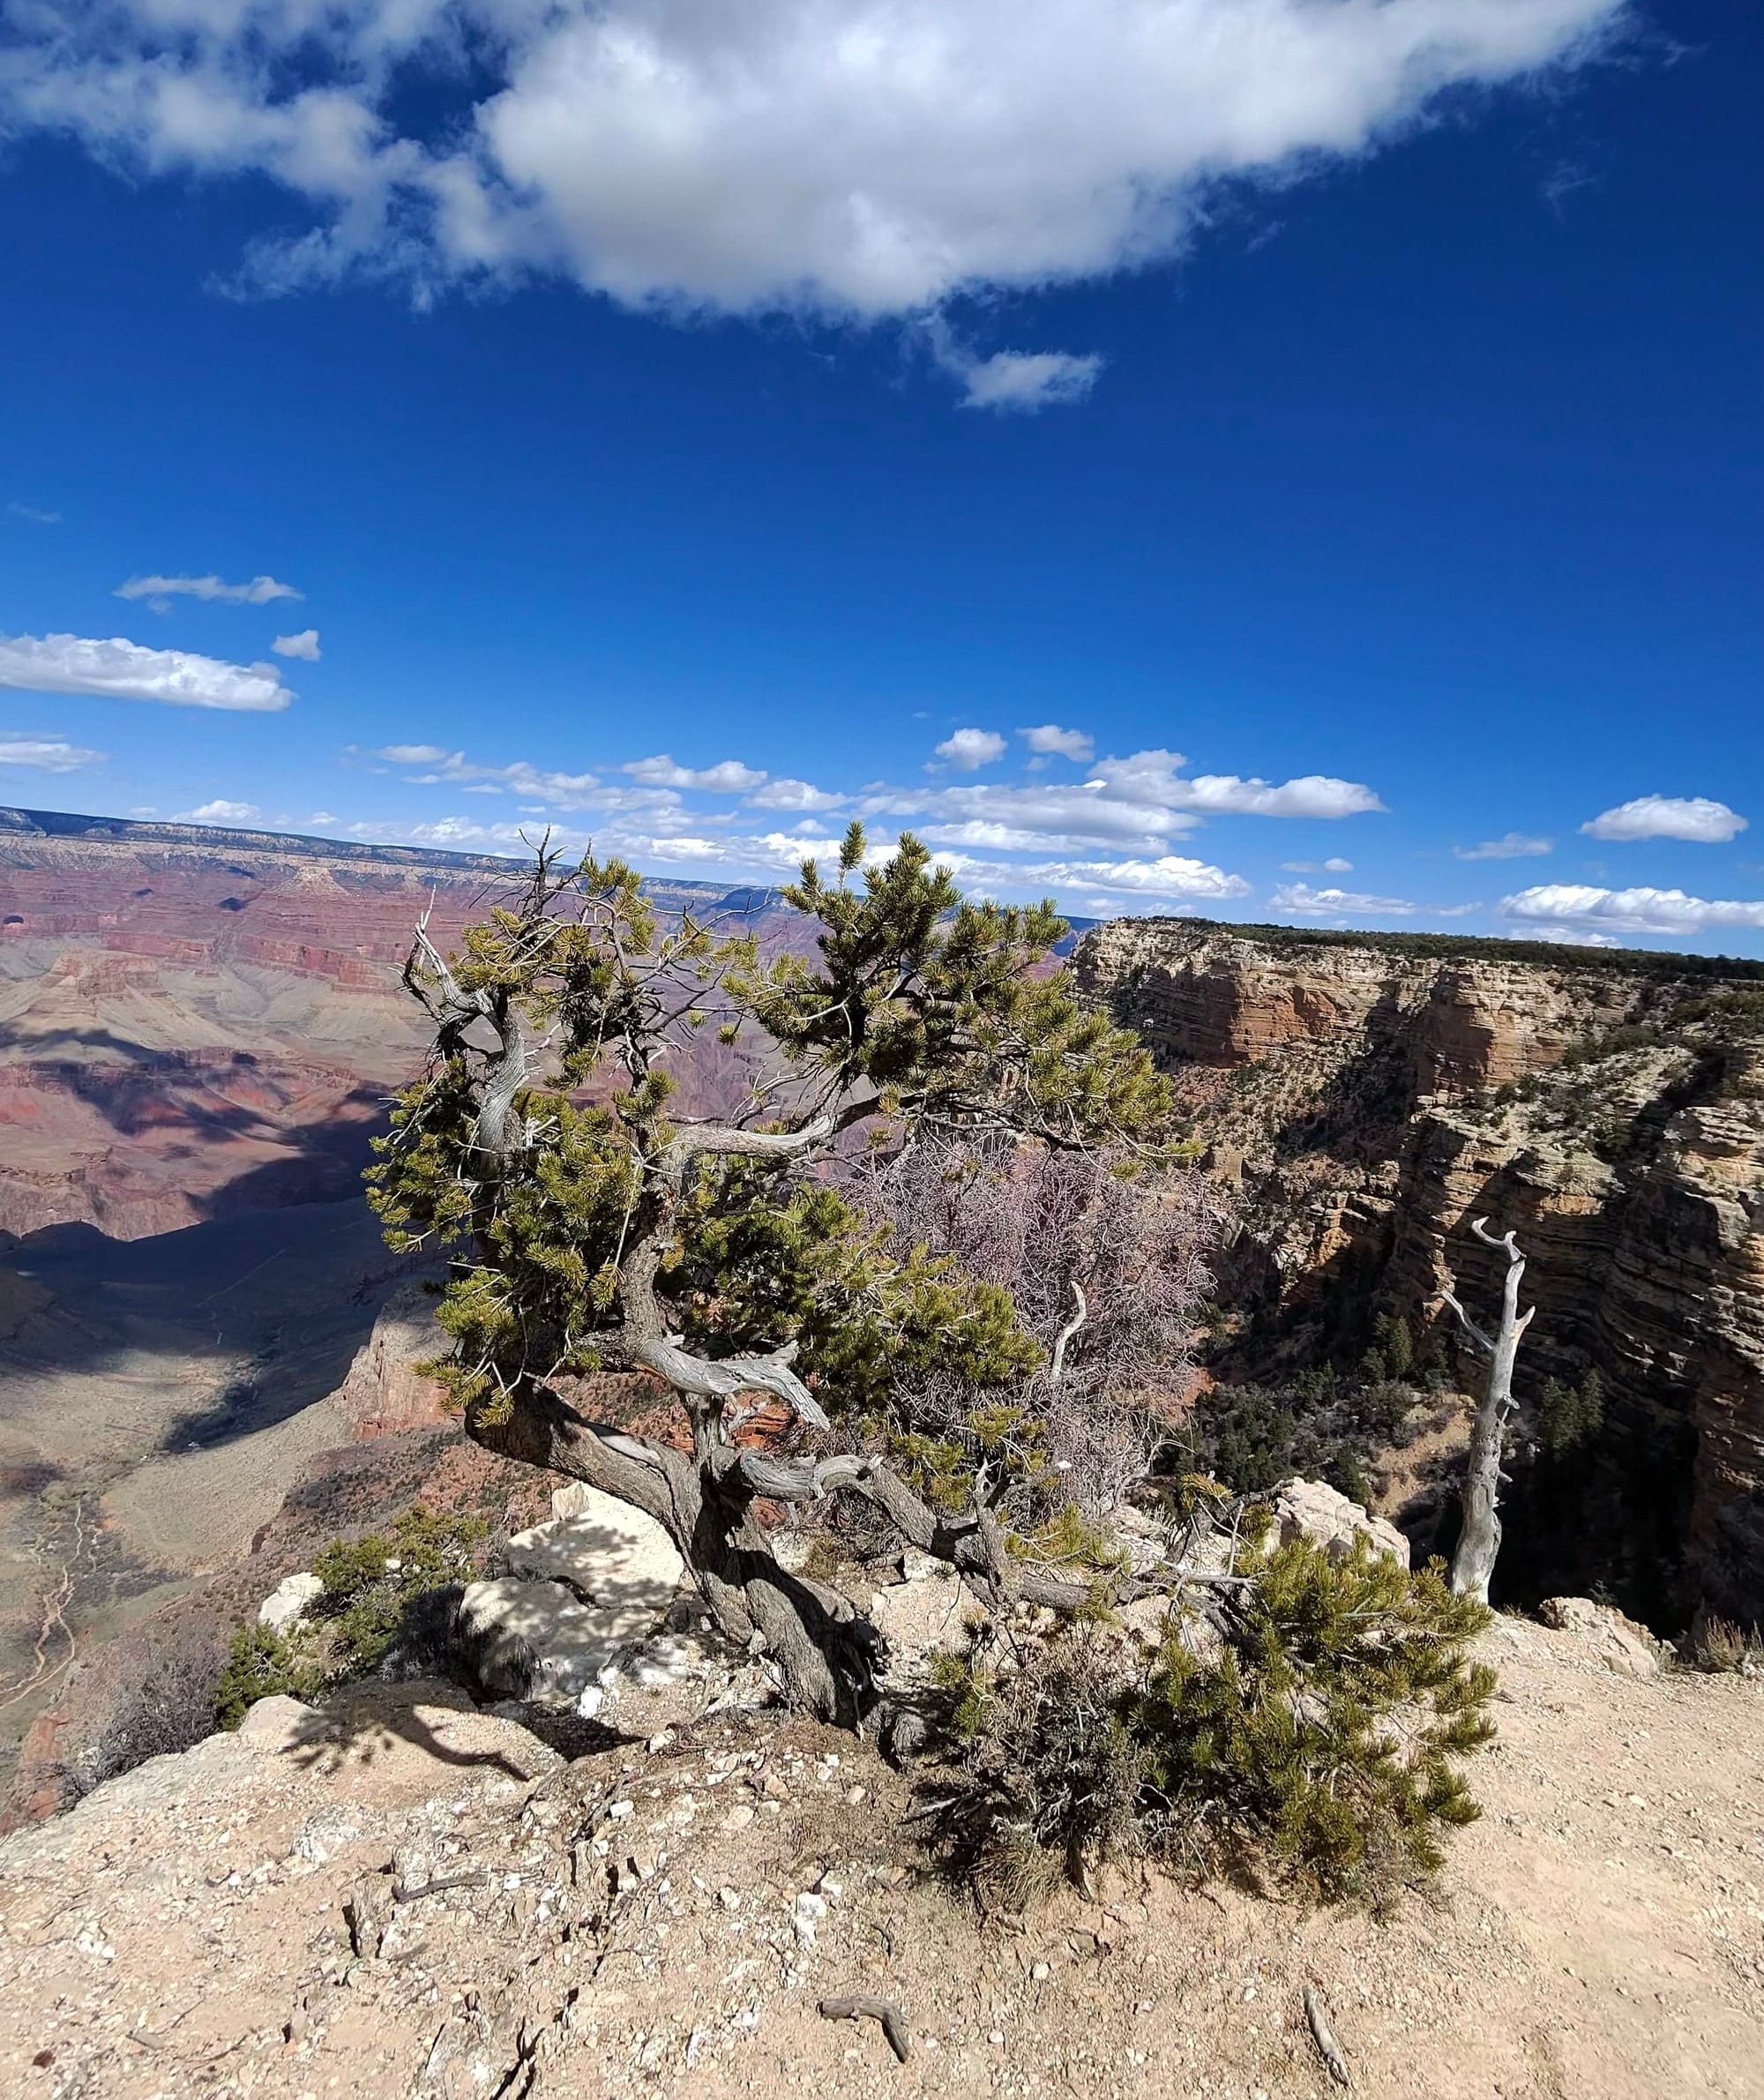 Peak Grand: One Canyon's Story